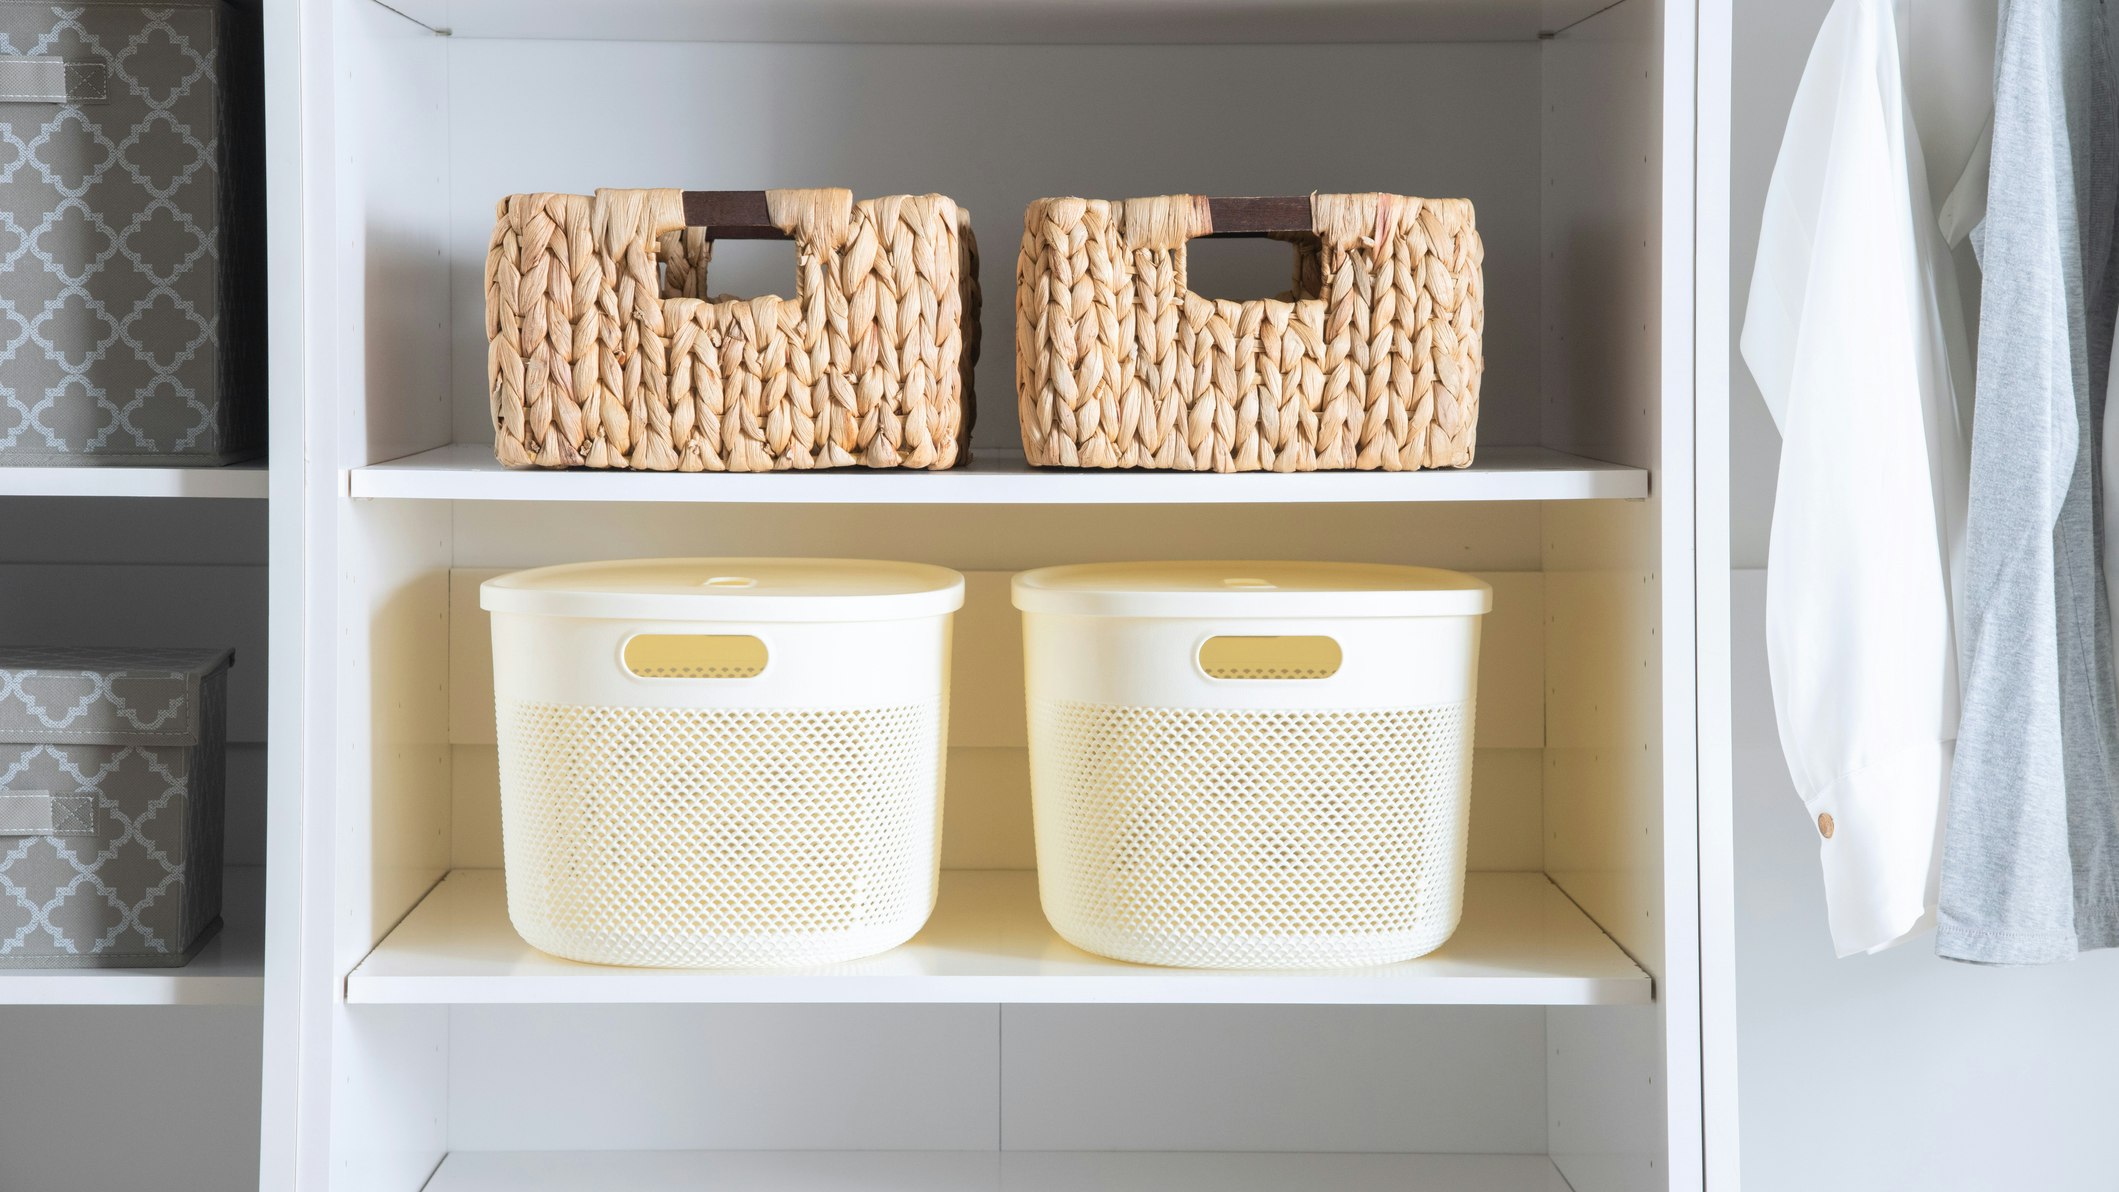 Storage baskets in utility room